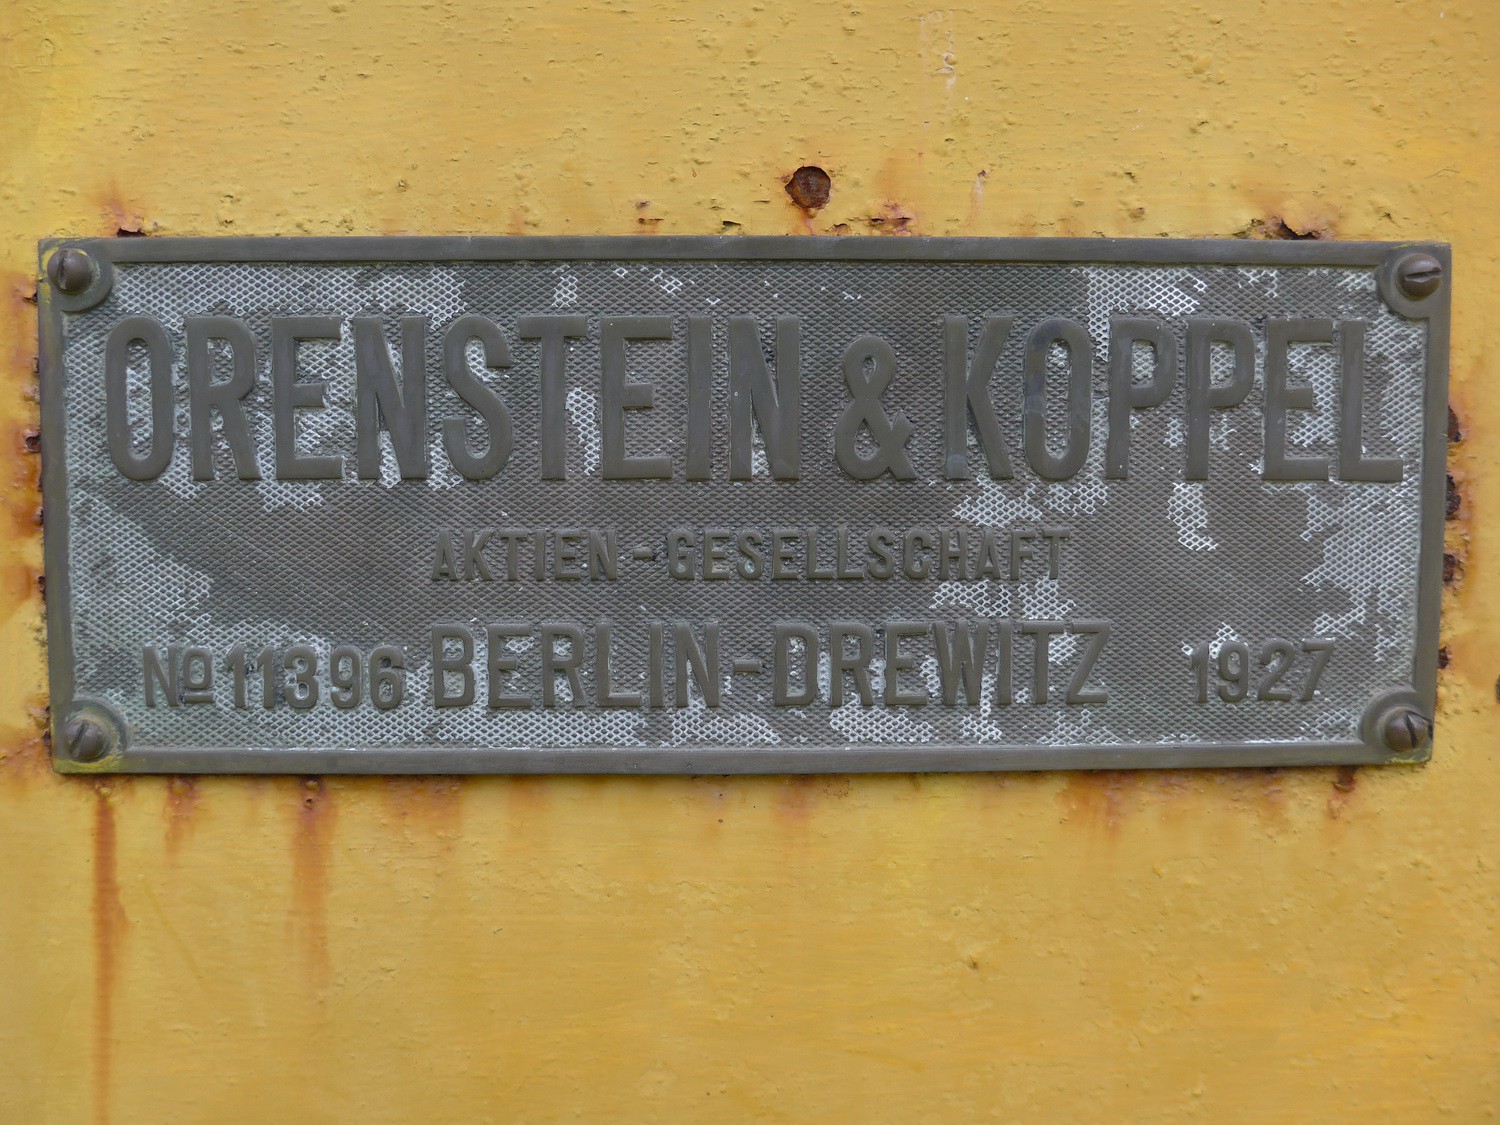 German label of another locomotive